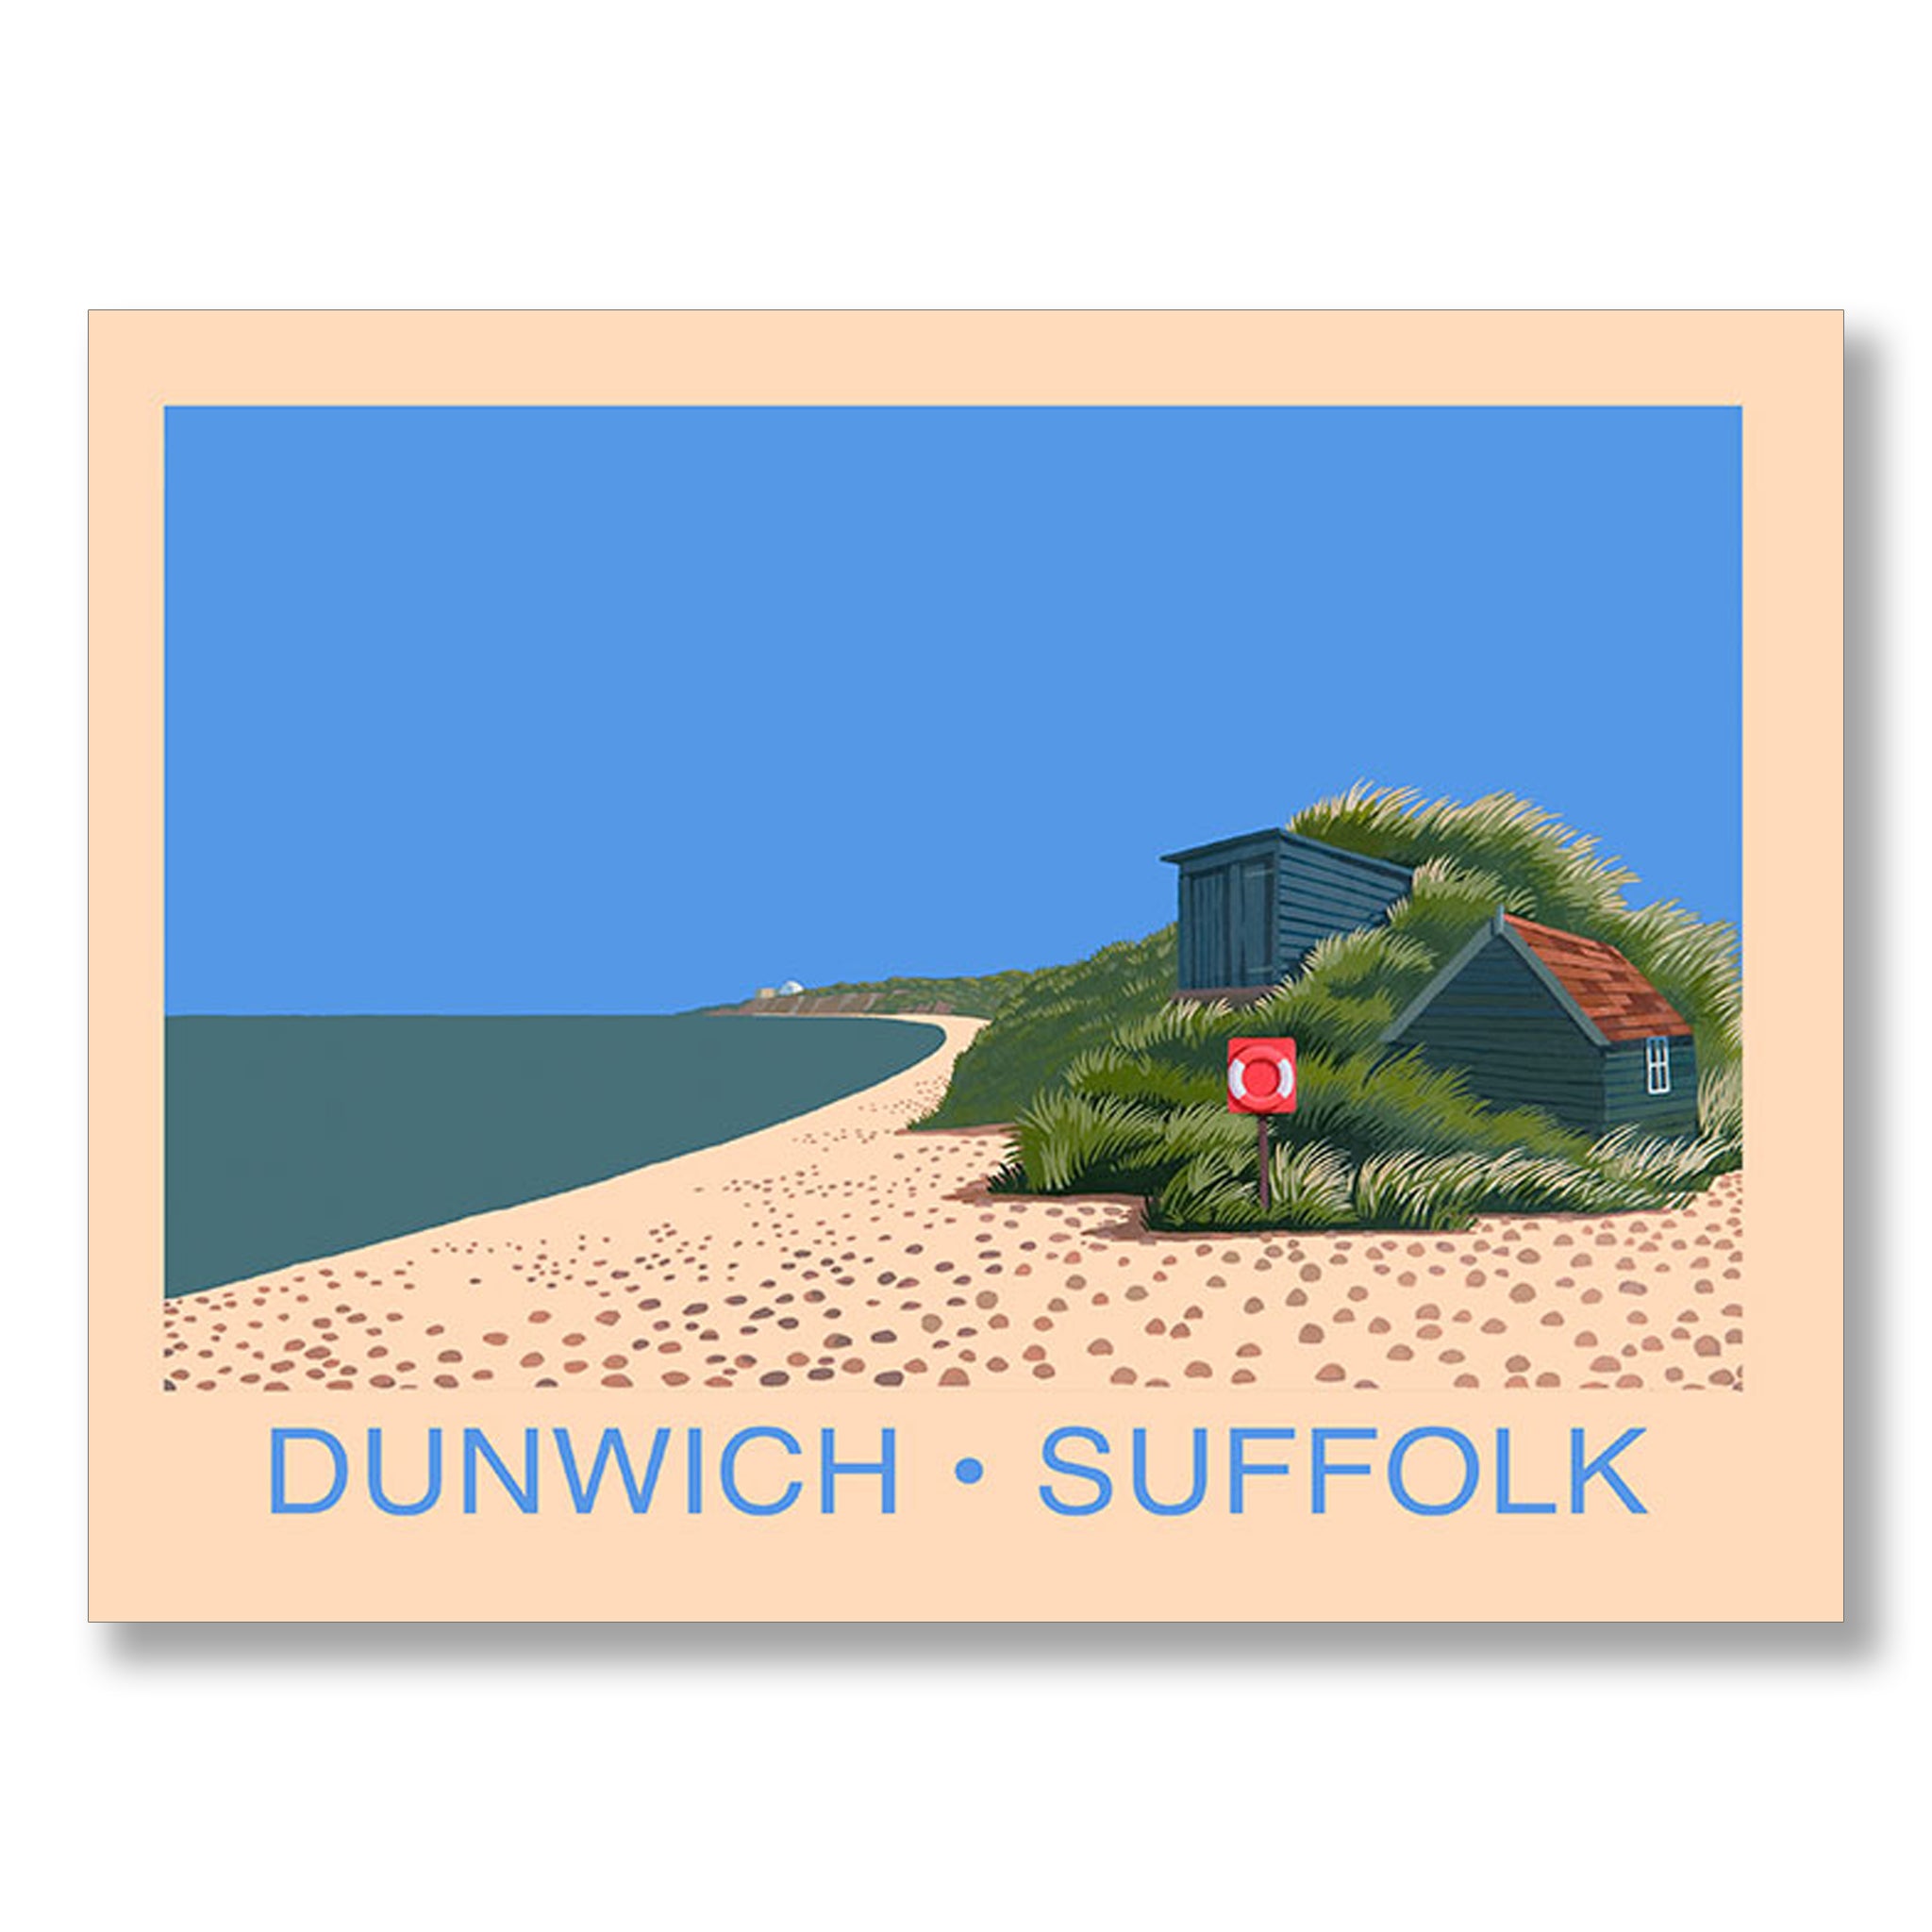 Dunwich Suffolk by David Kirk